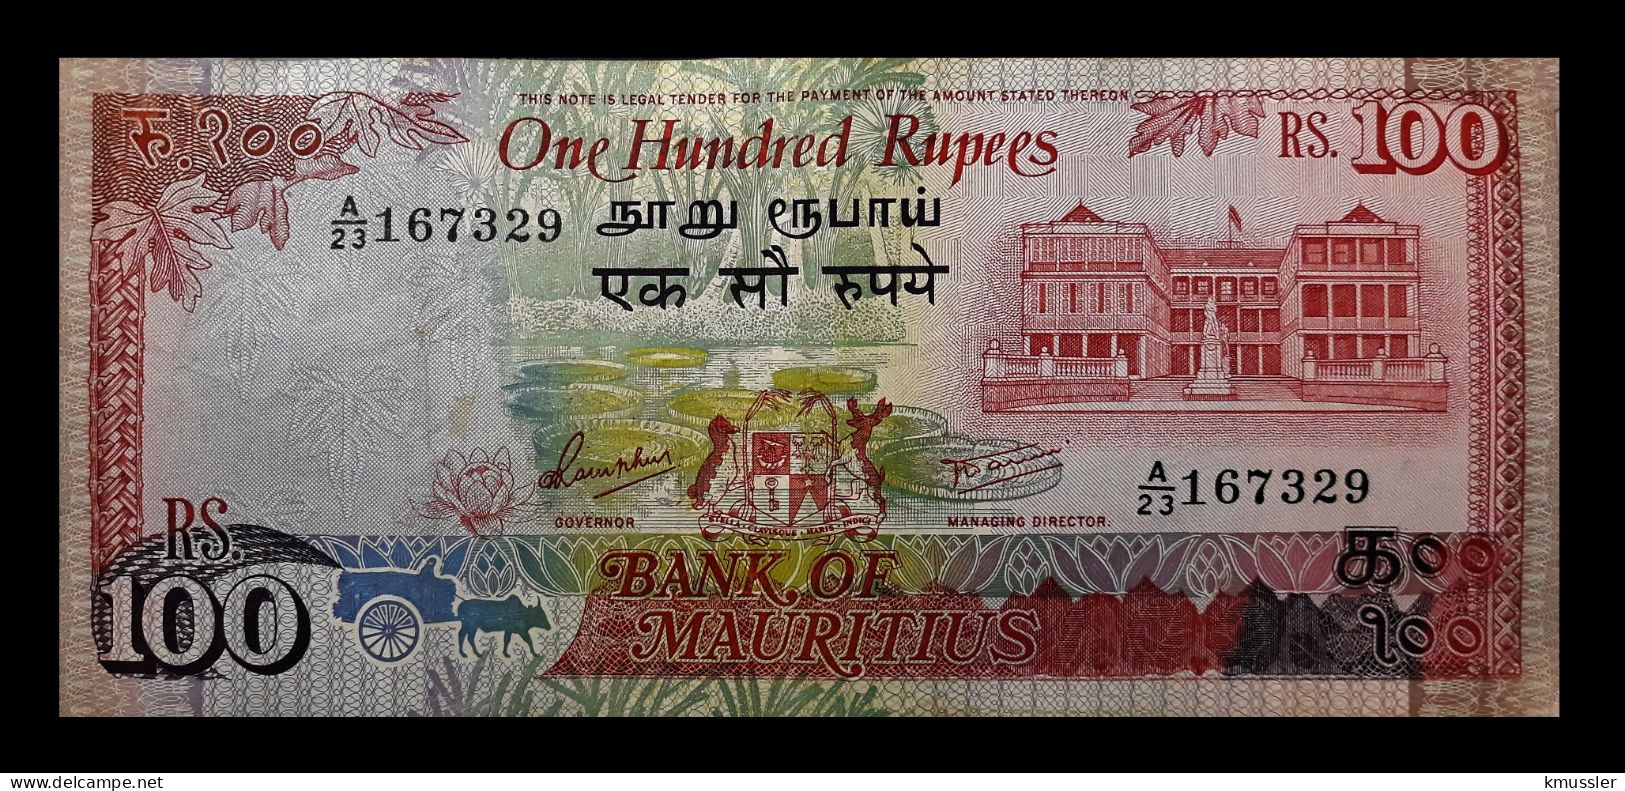 # # # Banknote Mauritius 100 Rupees # # # - Mauritius